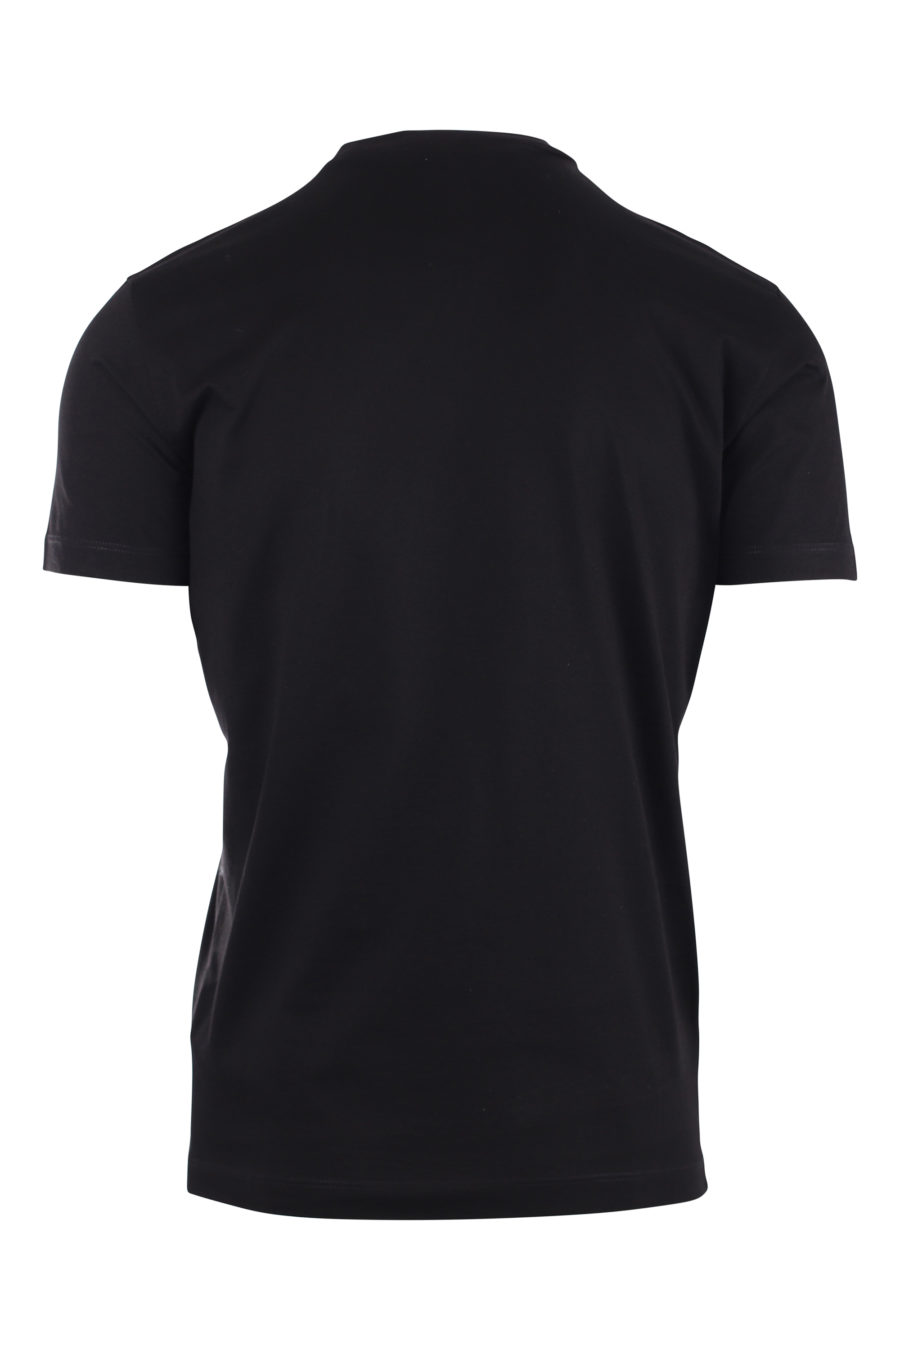 Black T-shirt with construction logo - IMG 9715